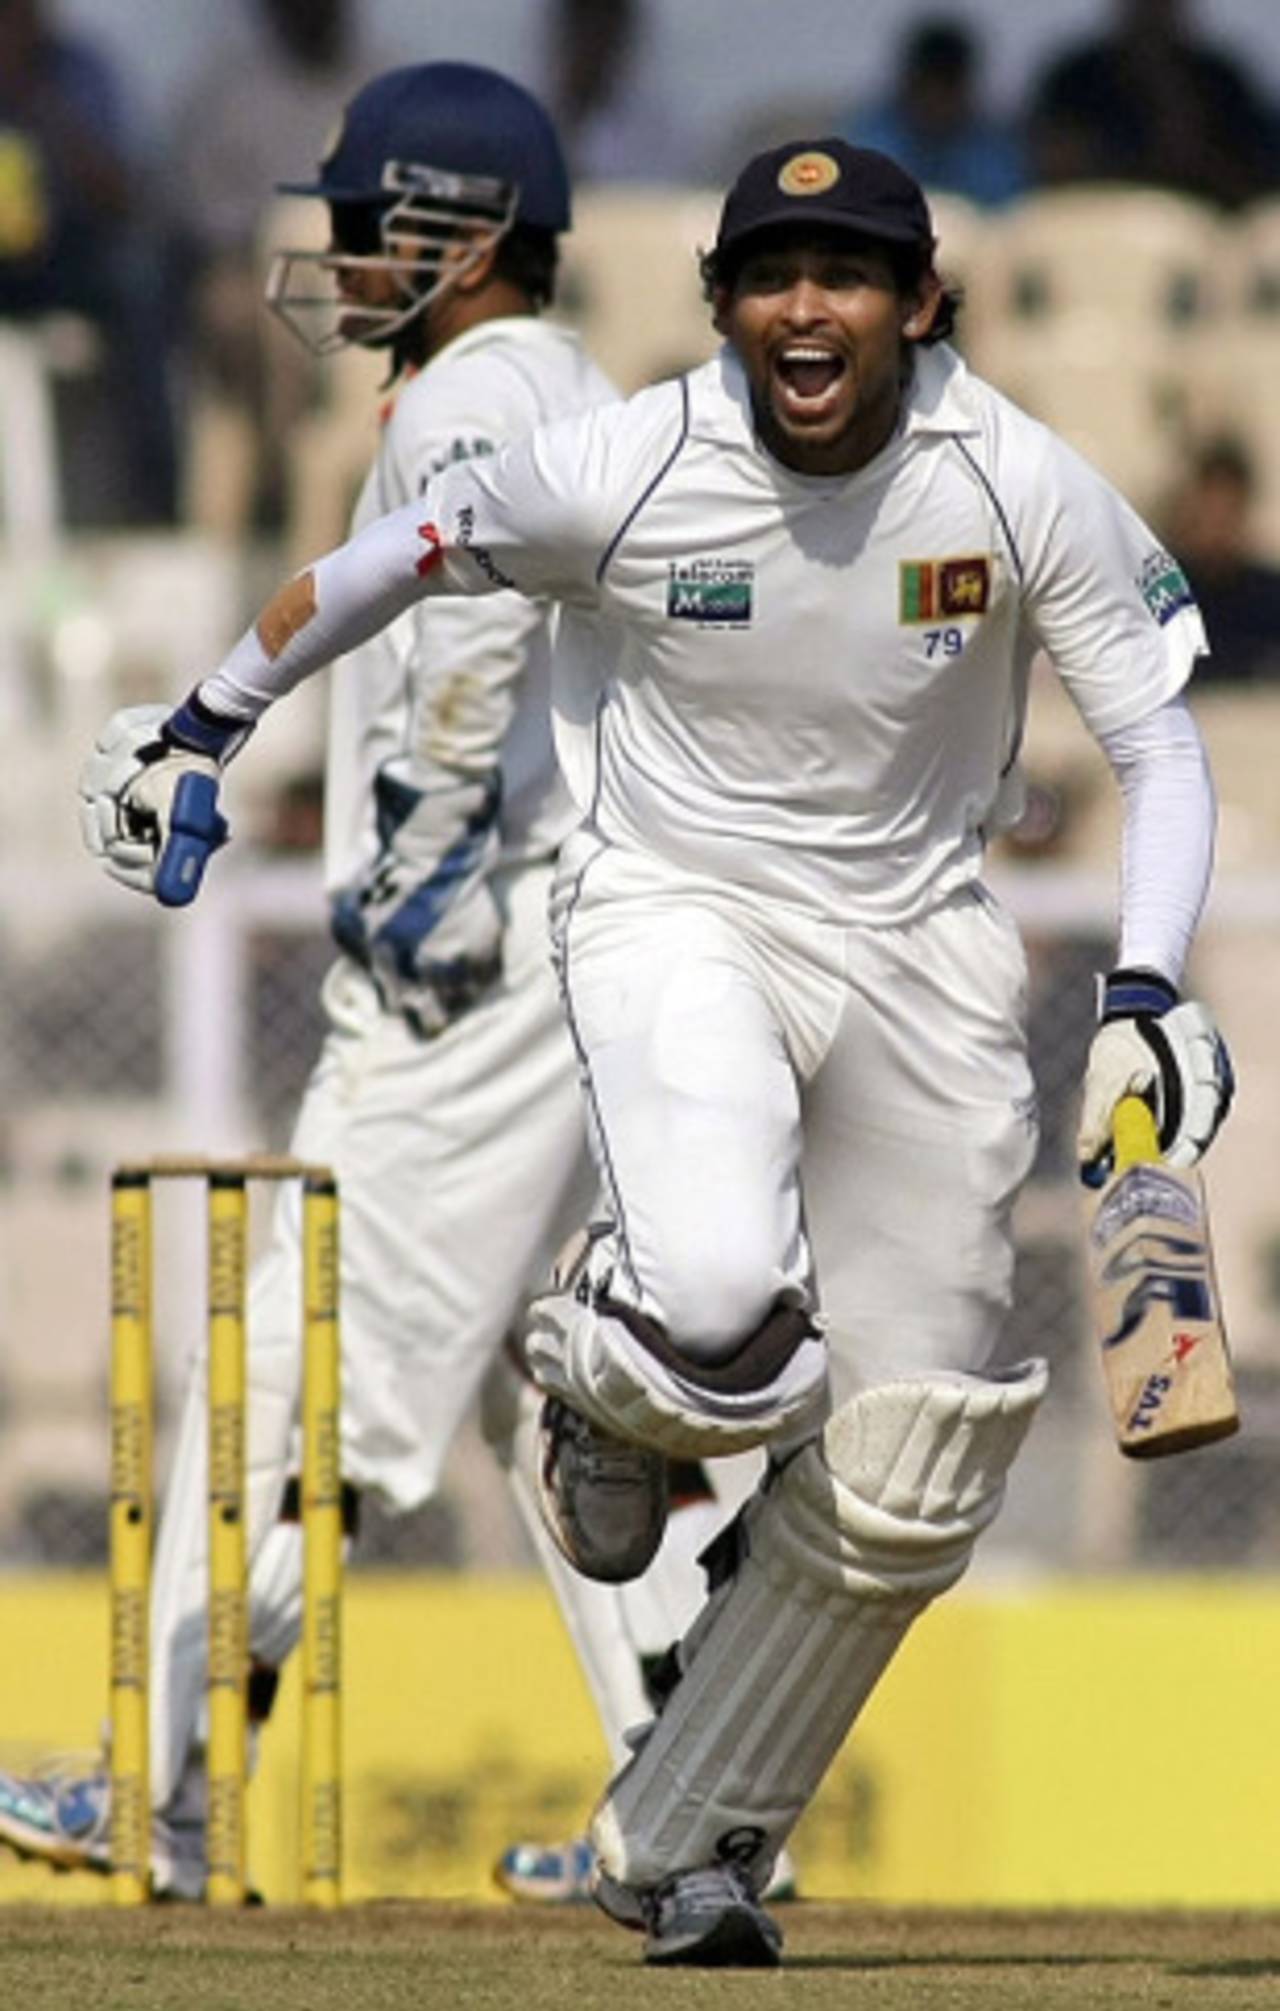 Tillakaratne Dilshan reaches his century, India v Sri Lanka, 3rd Test, Mumbai, 1st day, December 2, 2009